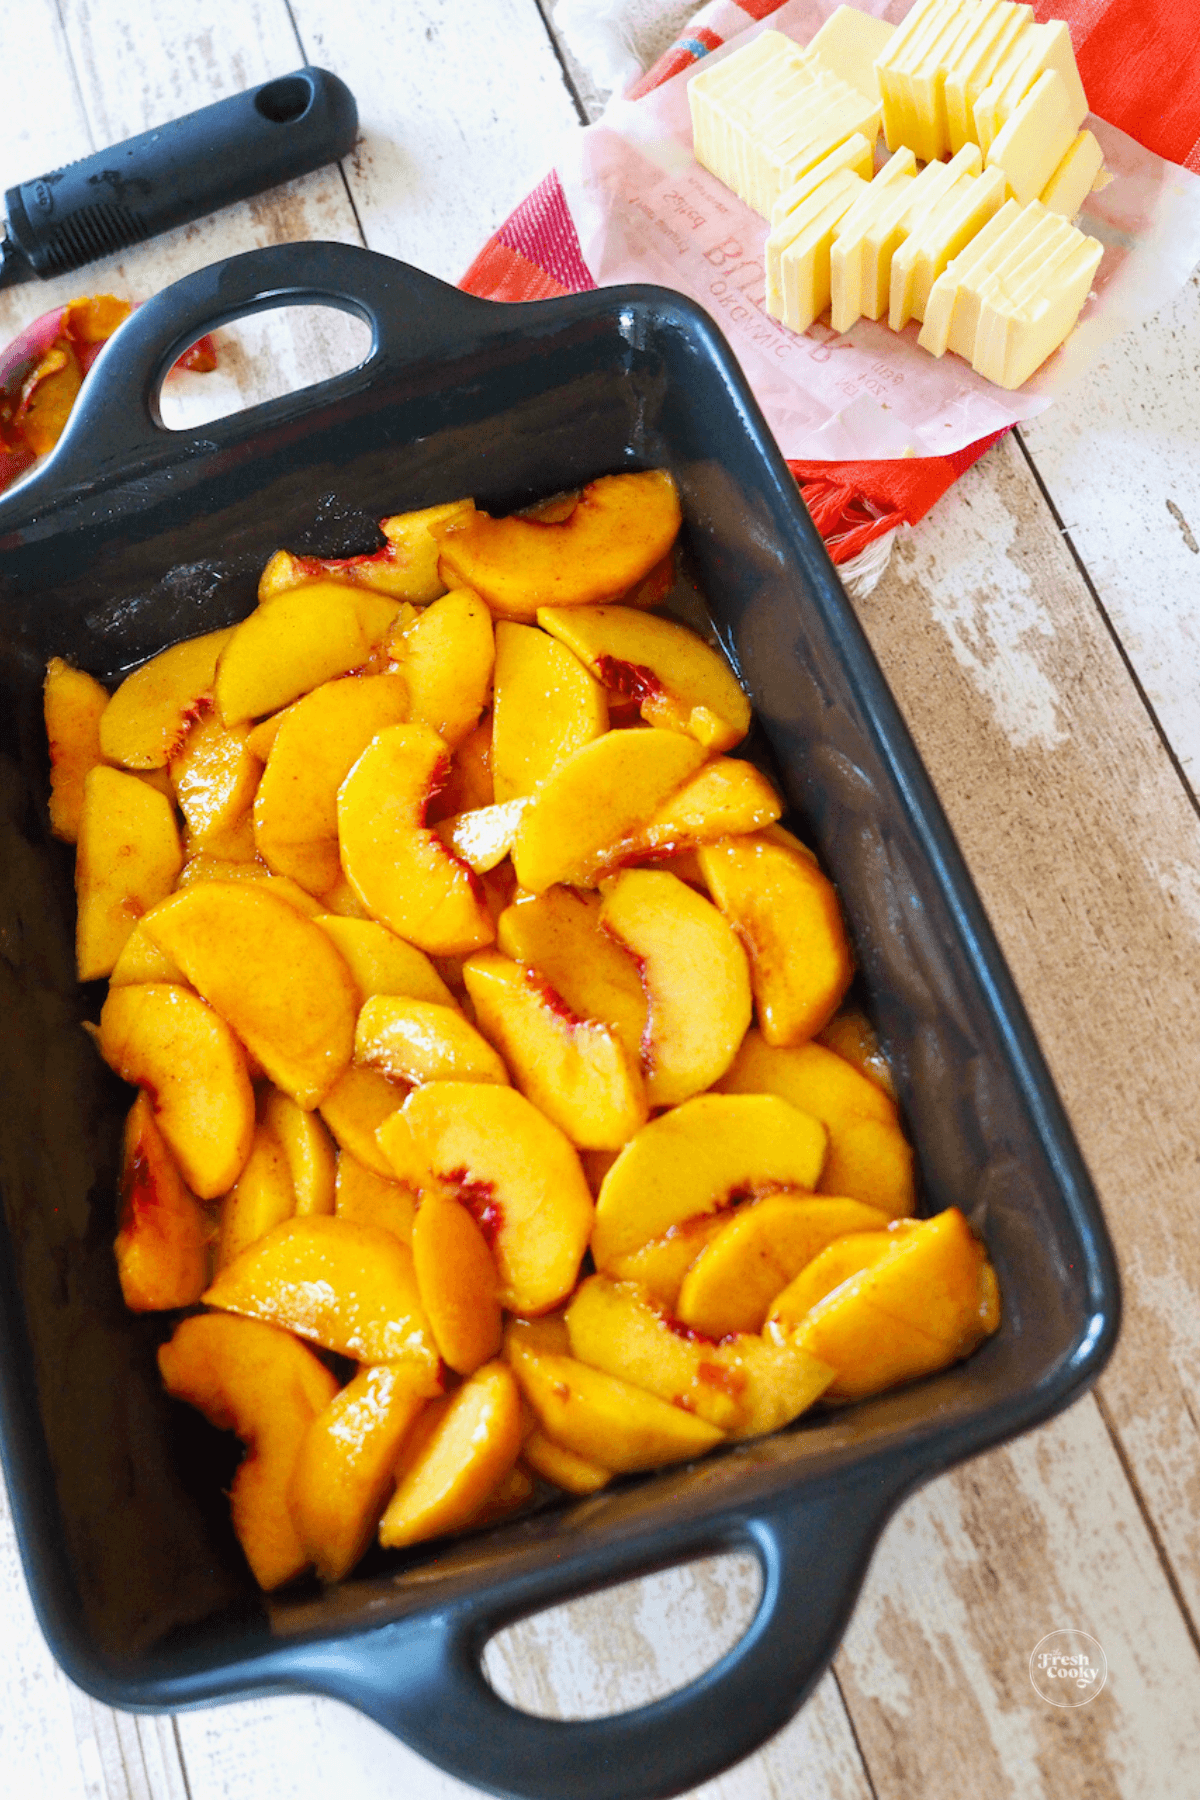 Peach mixture poured into prepared baking dish.